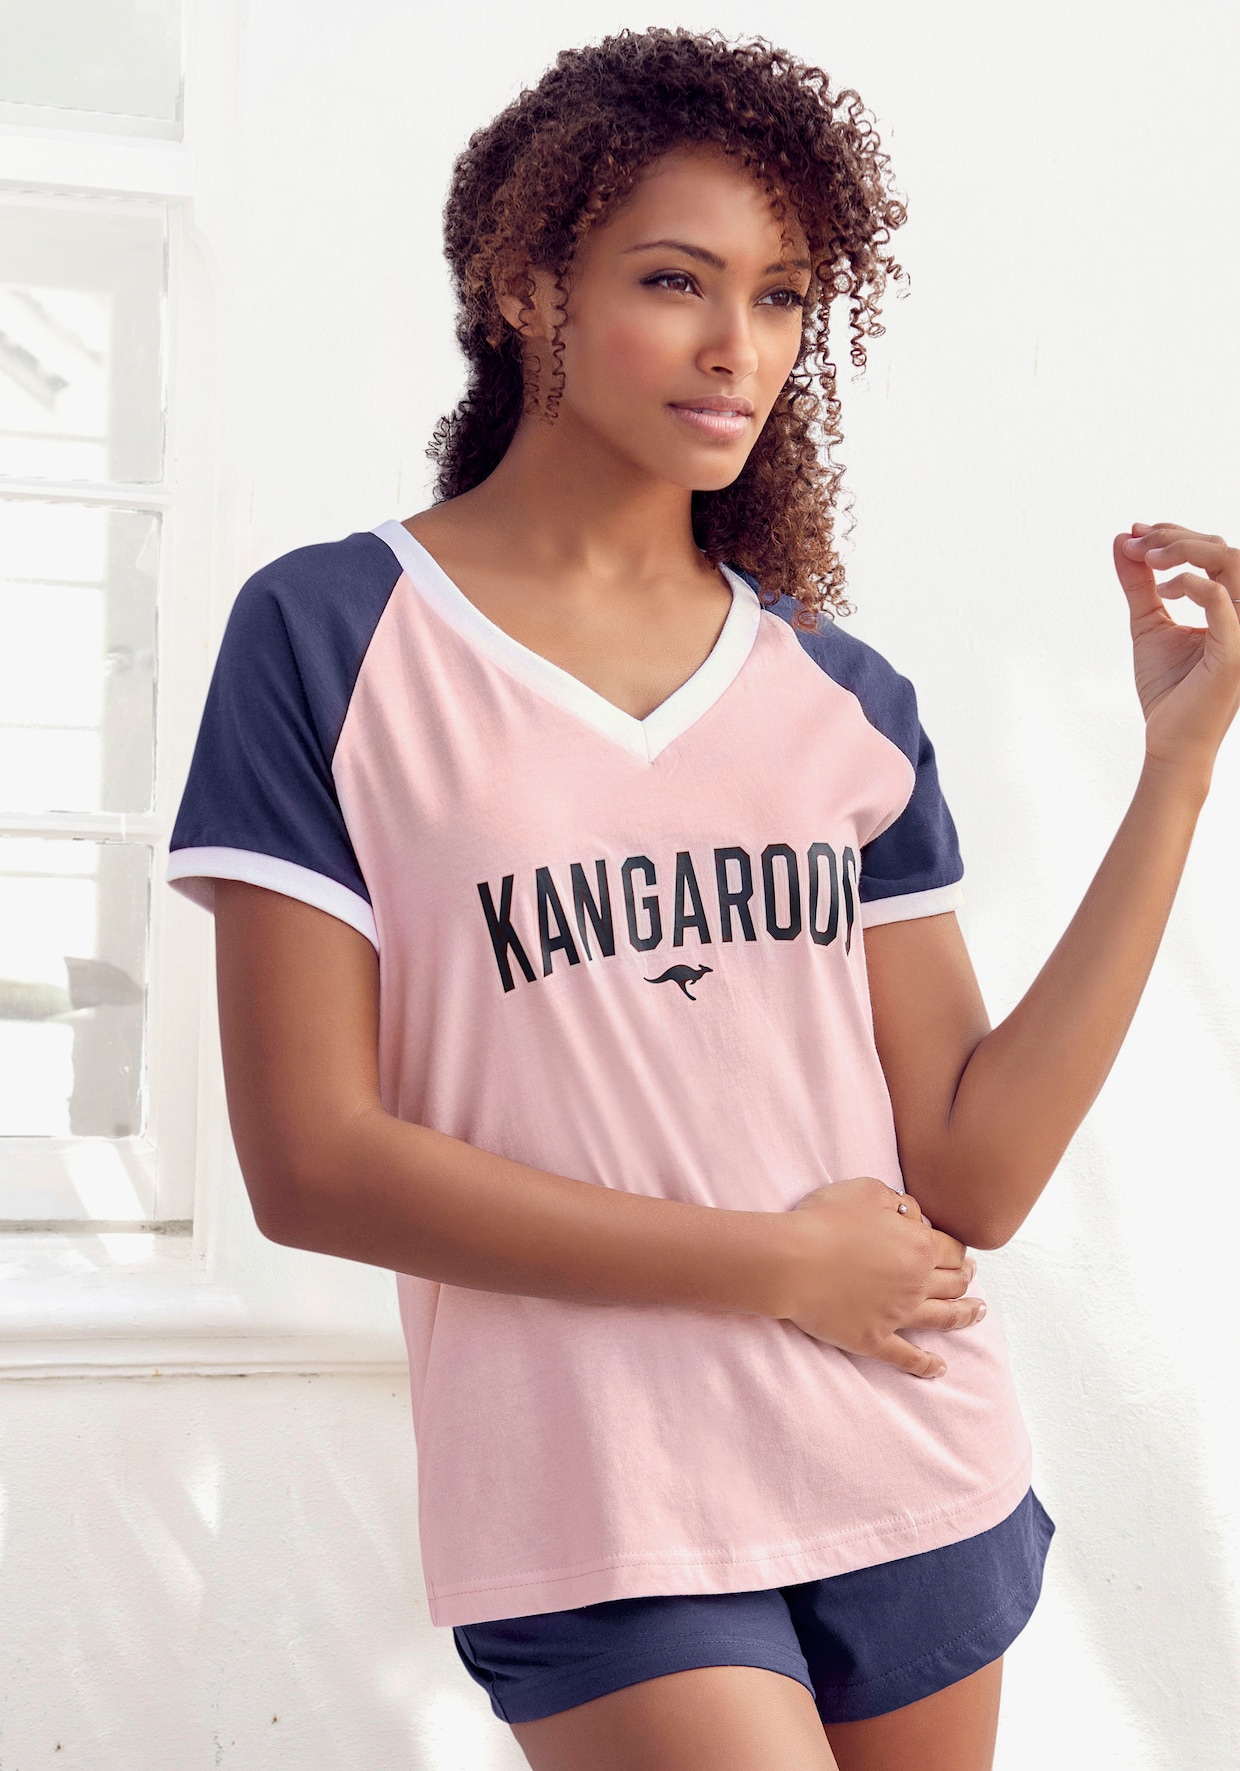 KangaROOS Shorty - rosa-dunkelblau